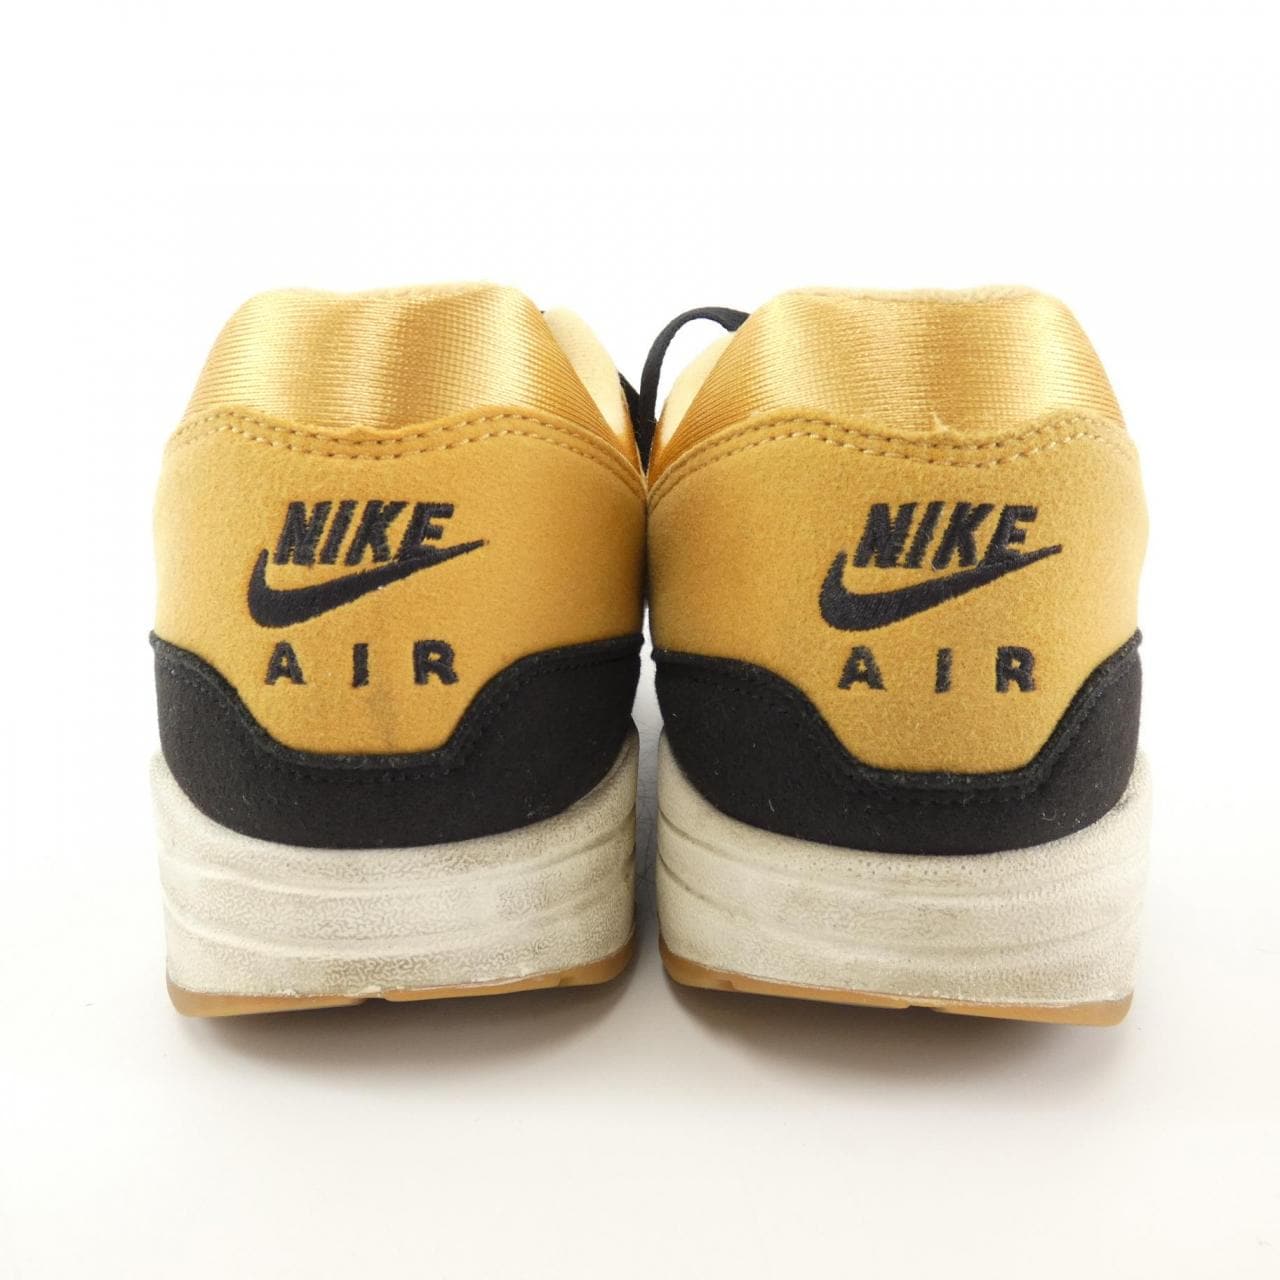 Nike NIKE sneakers